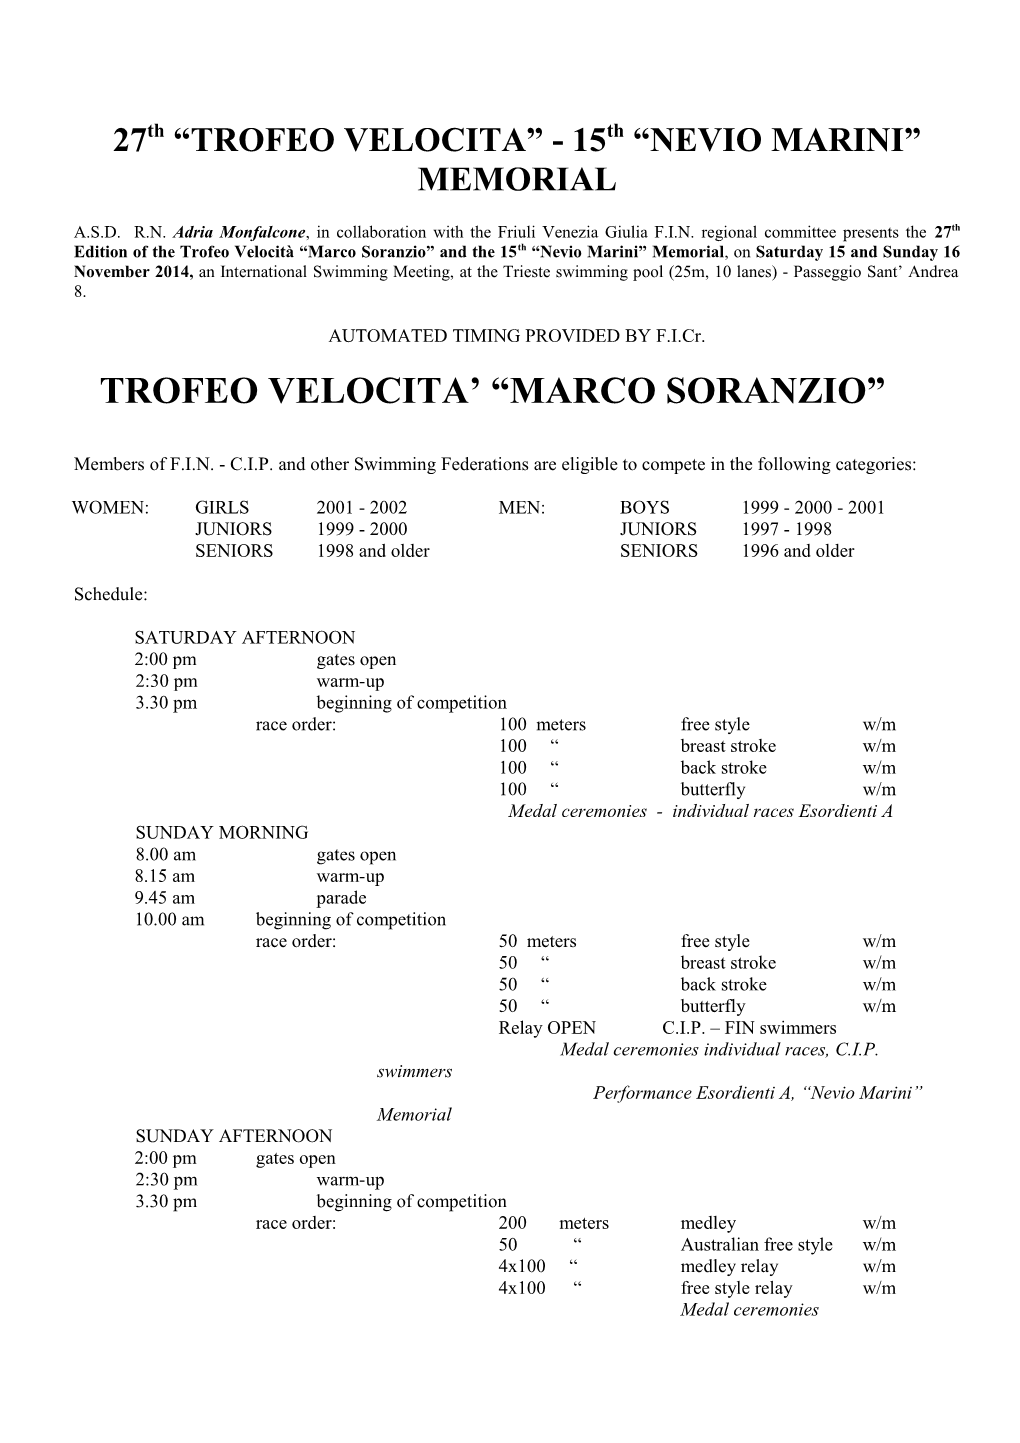 14 Trofeo Velocita 2 Memorial Nevio Marini